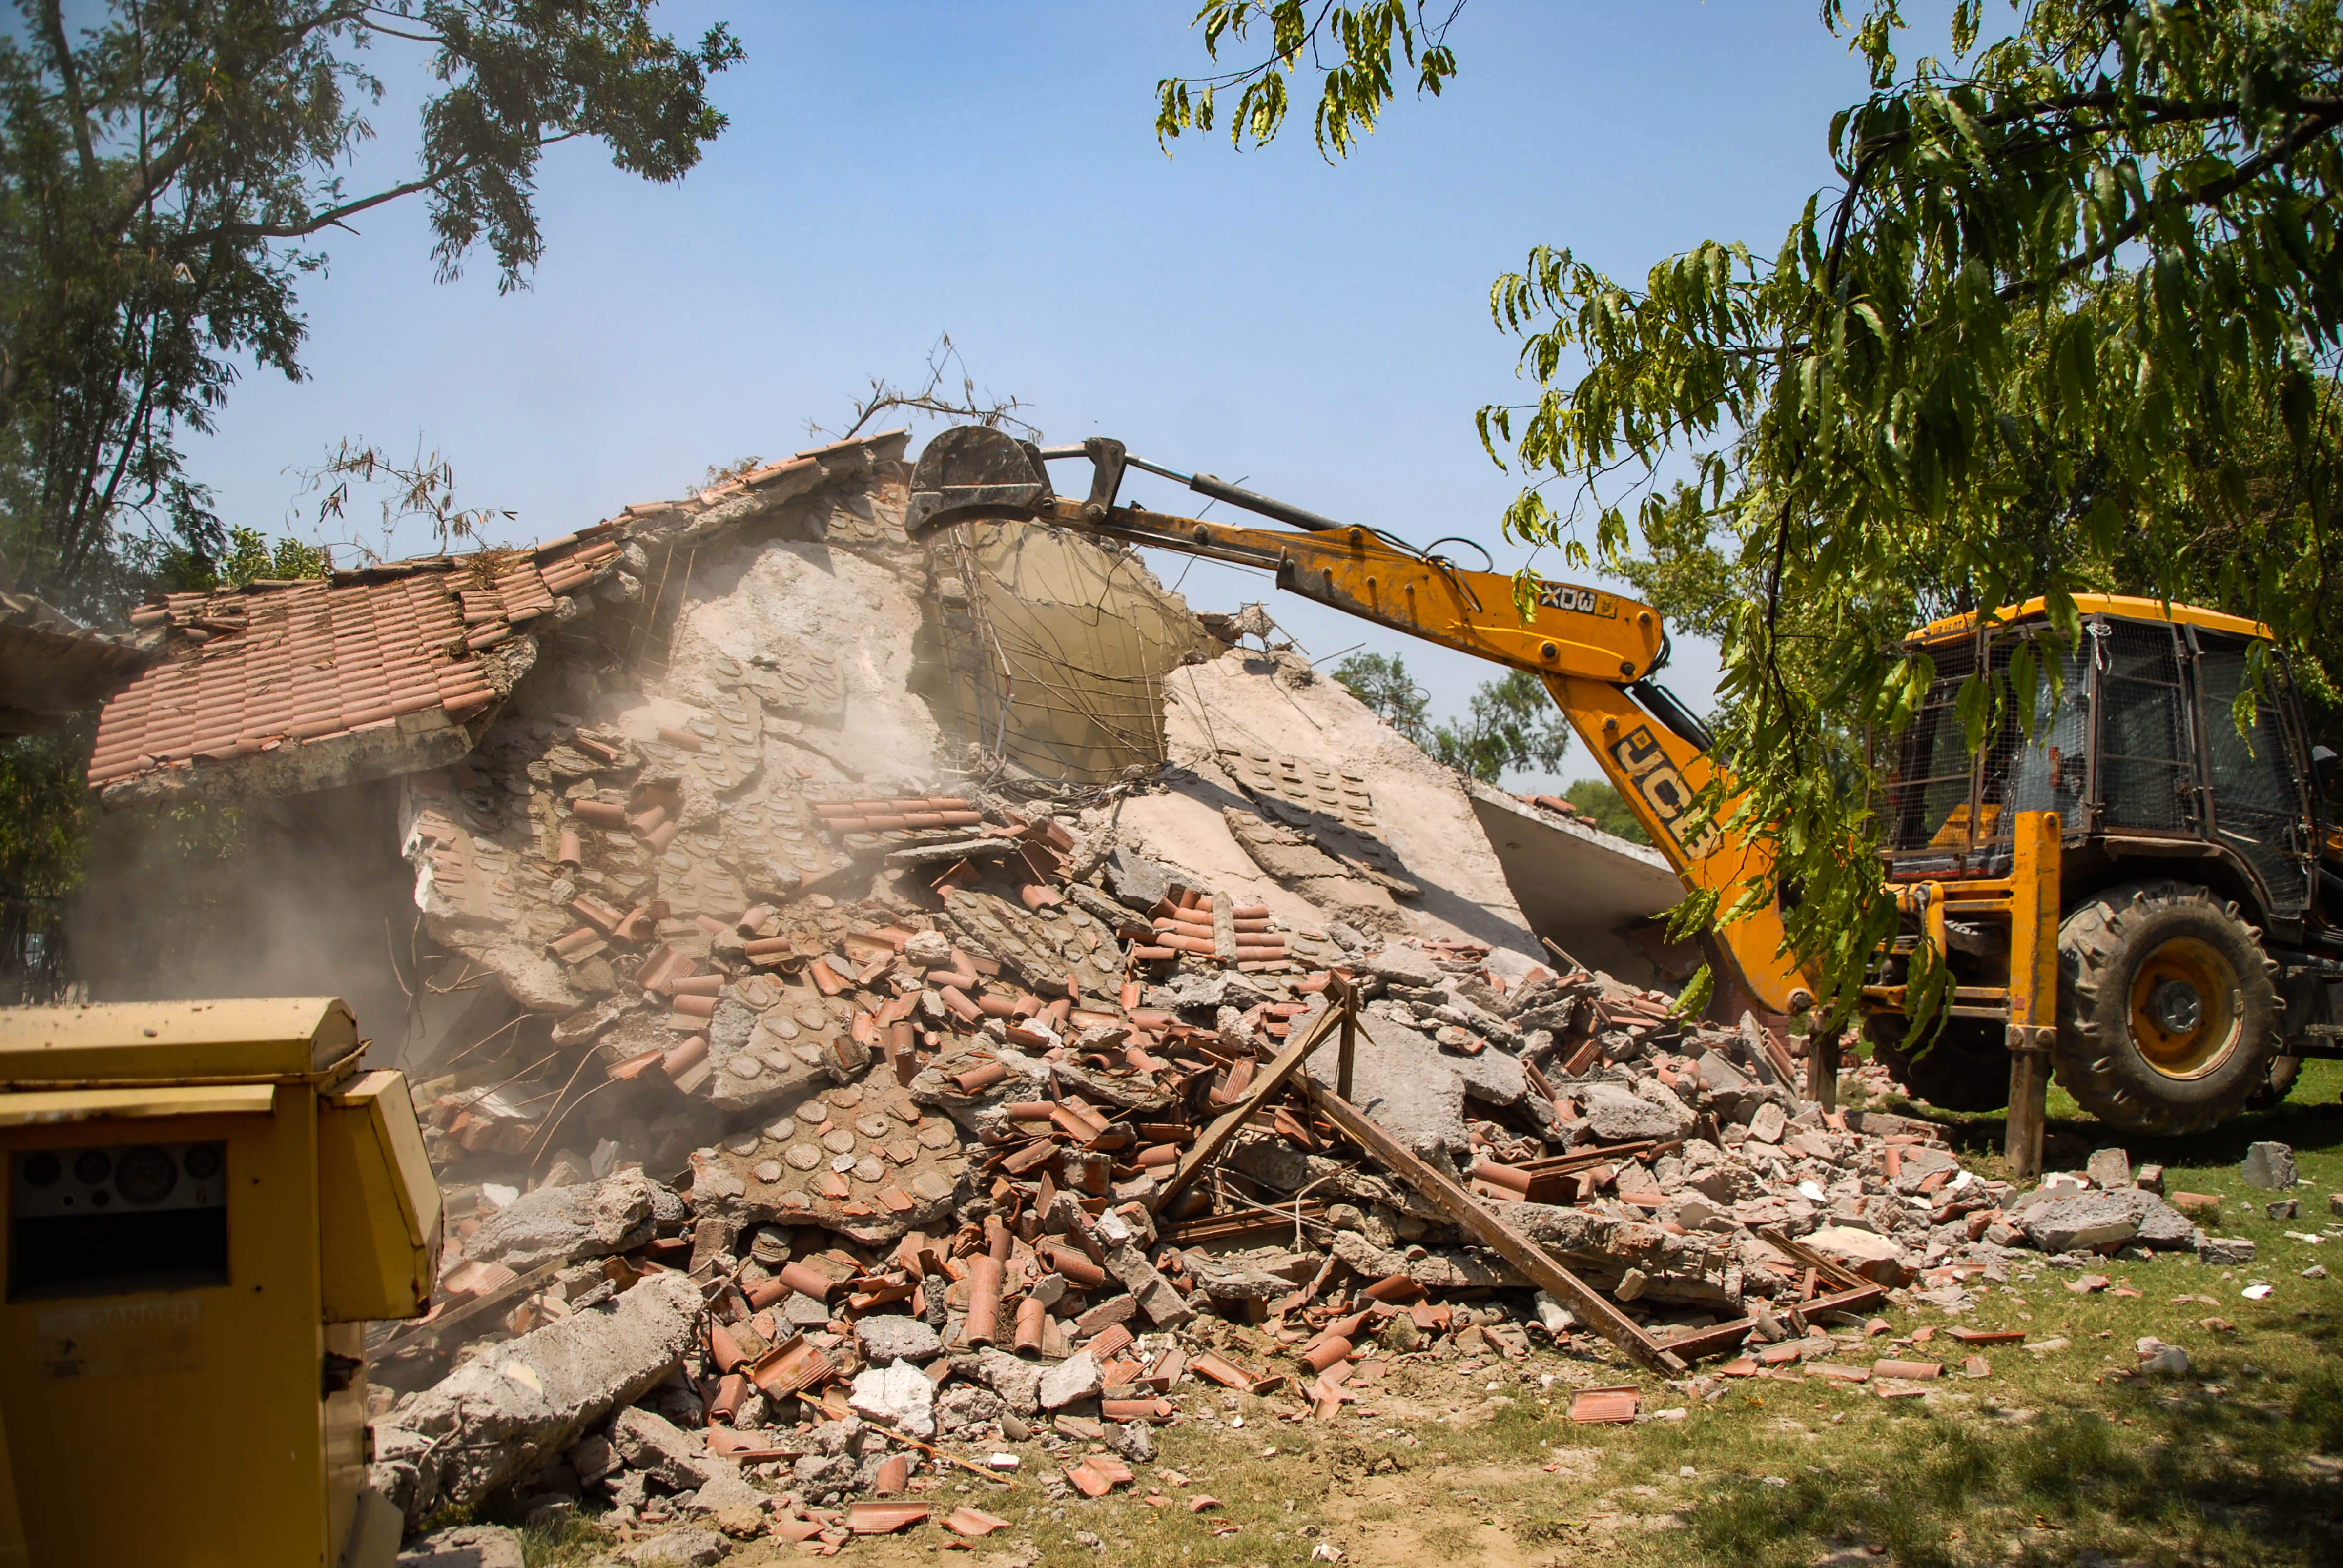 UP demolitions: Follow due legal process, says SC